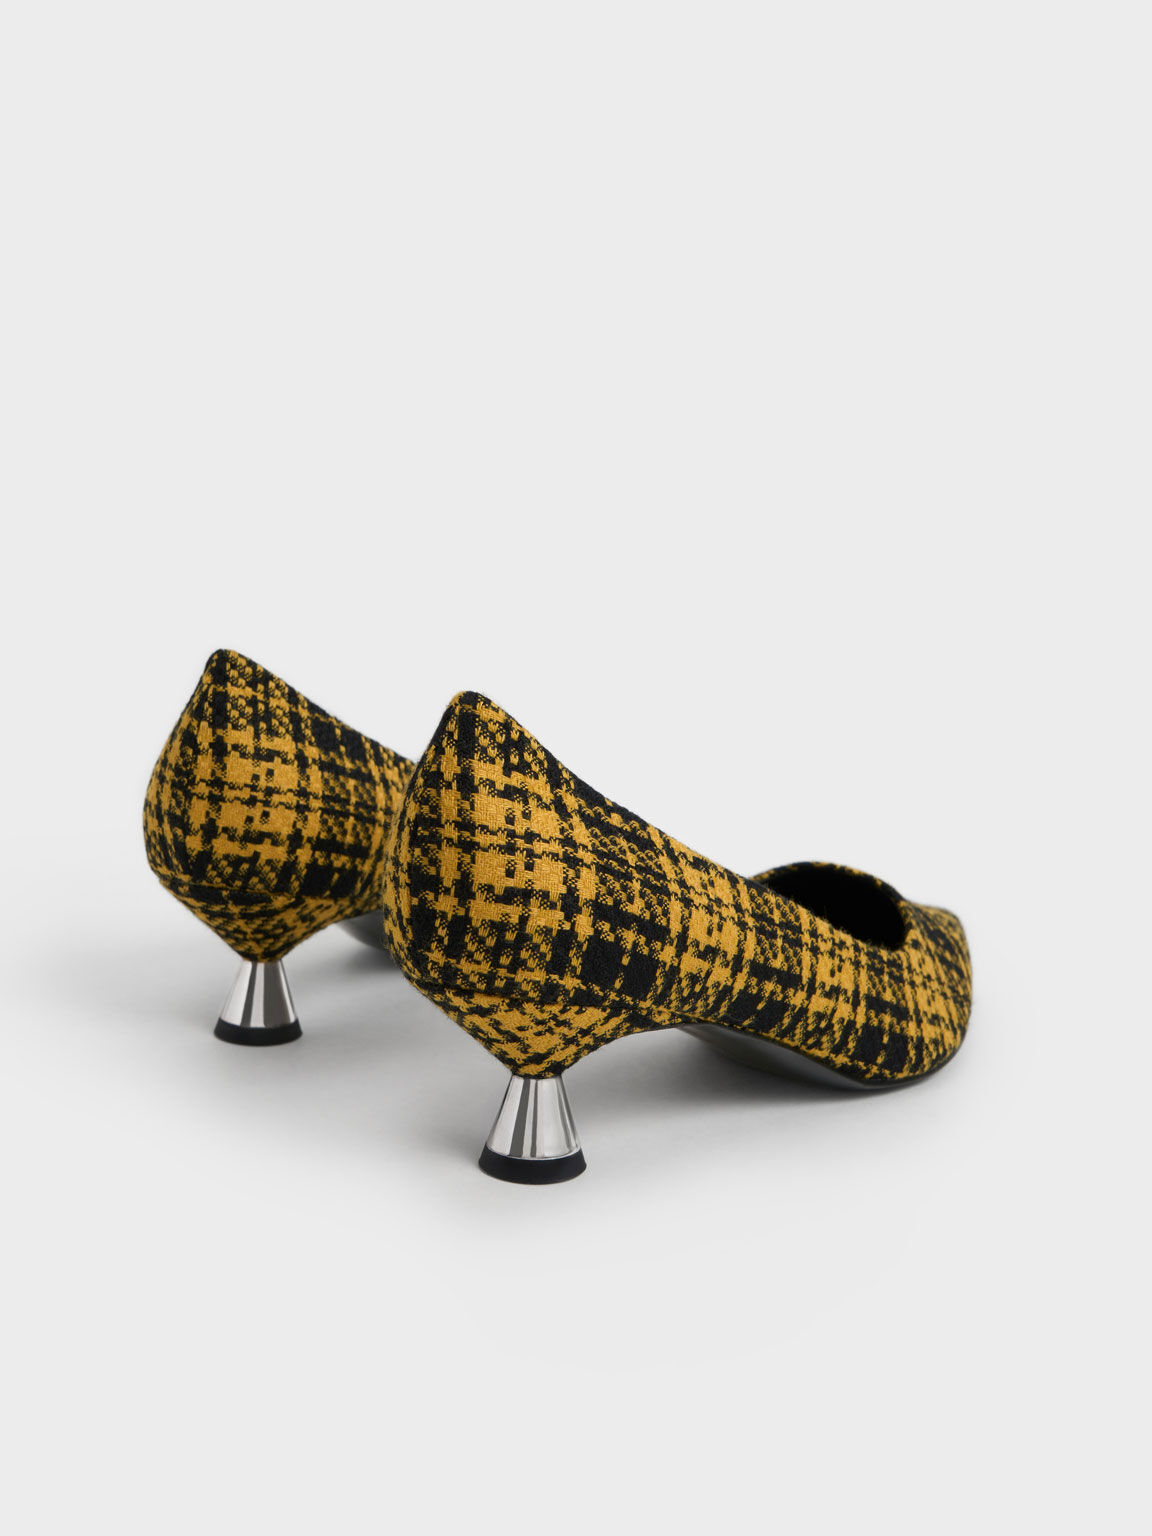 Checkered Spool Heel Pumps, Yellow, hi-res